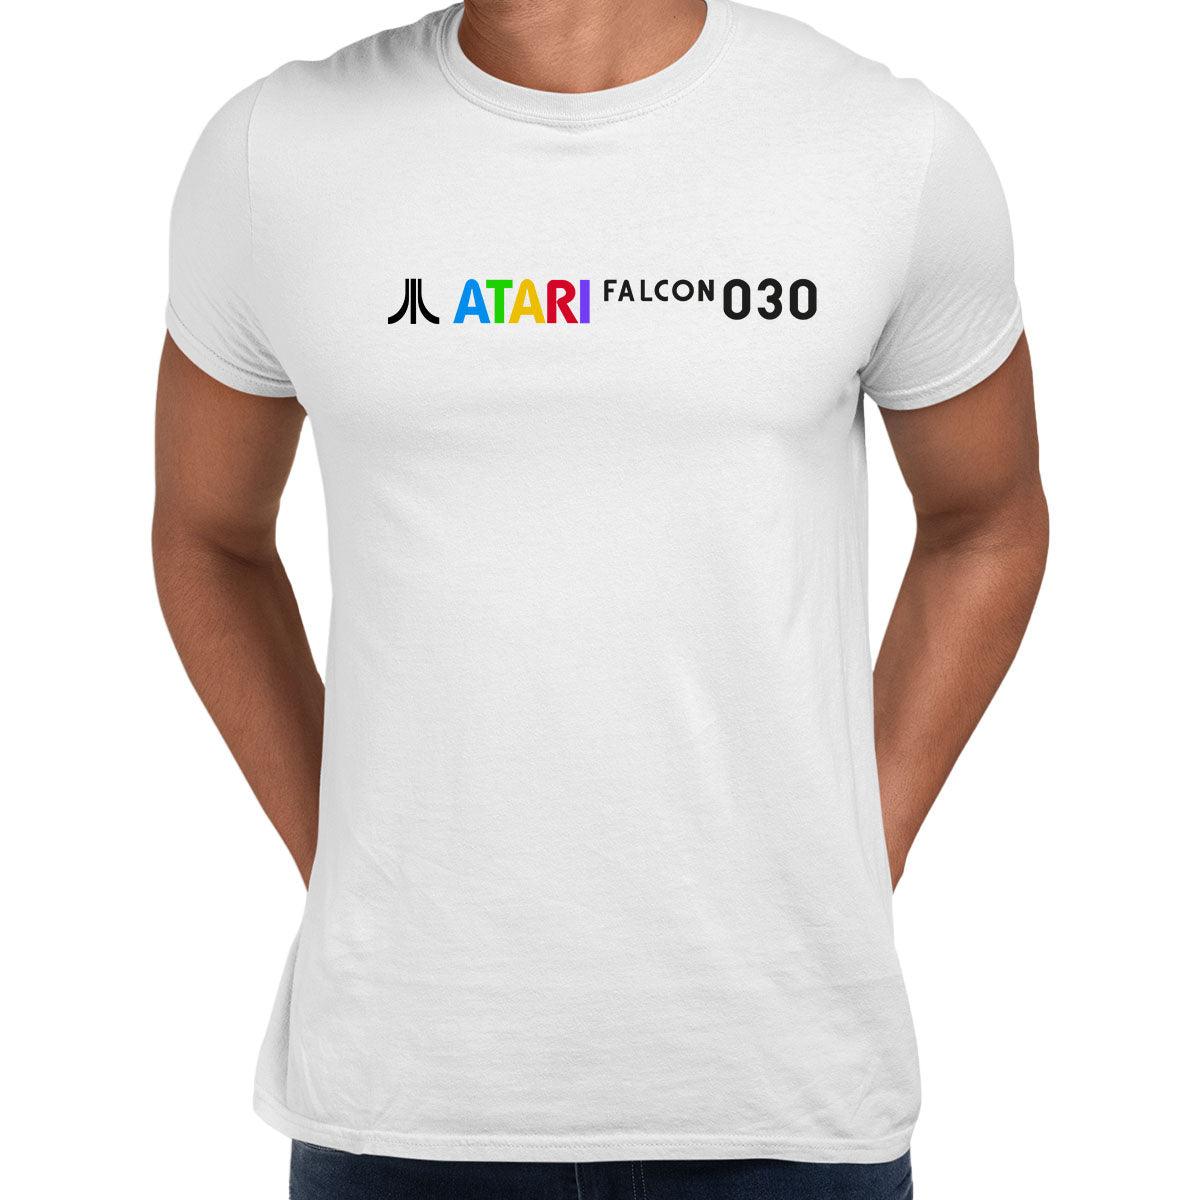 Atari Falcon 030 Computer T shirt - Kuzi Tees